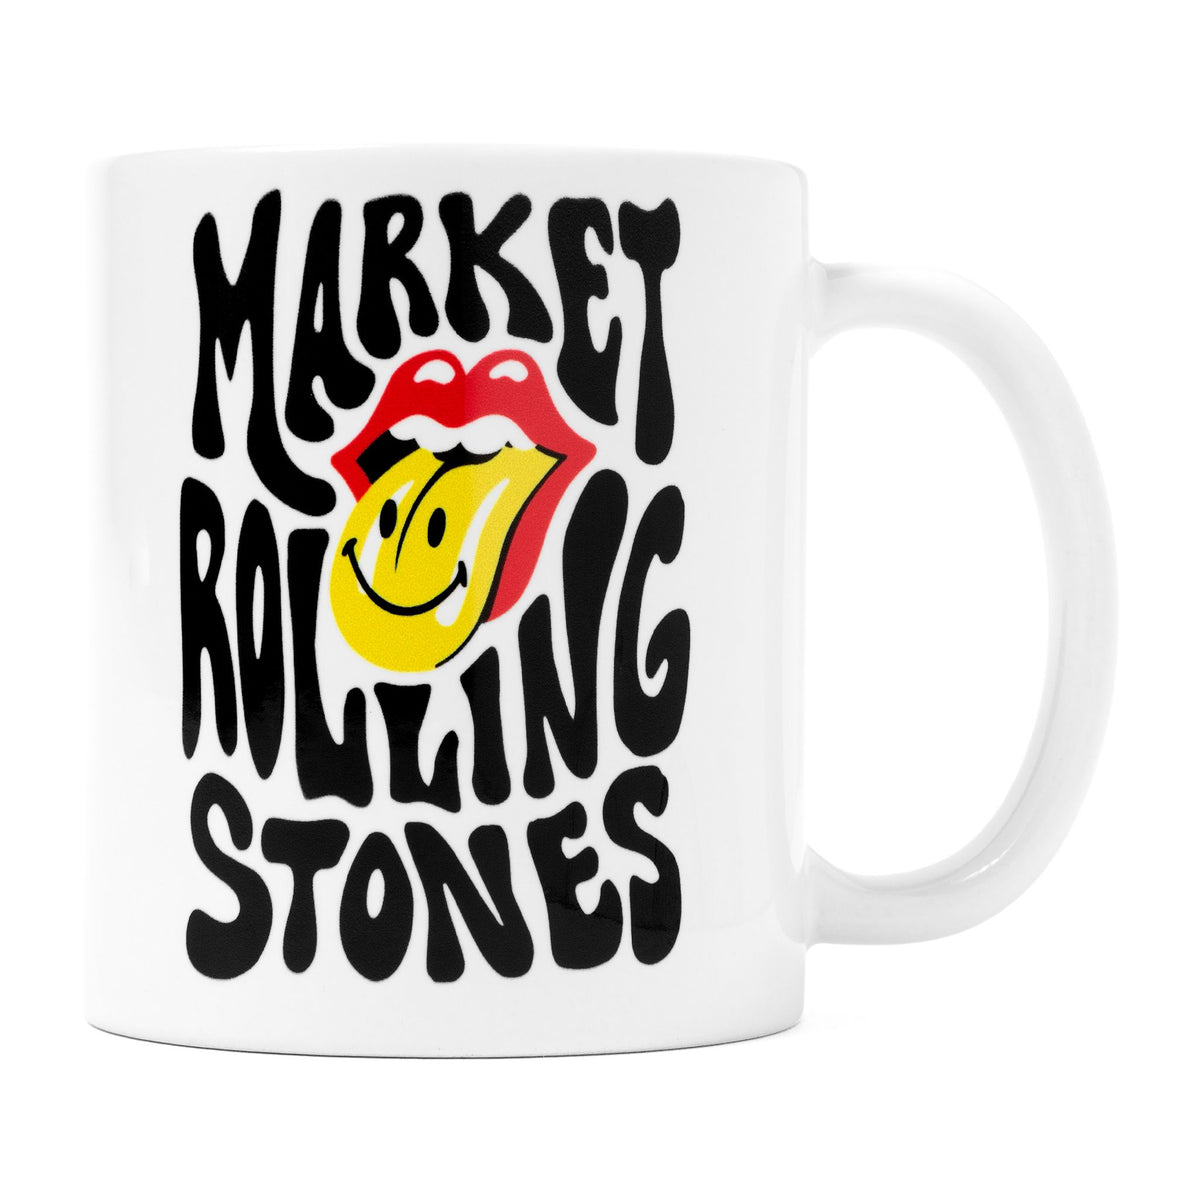 Market Rollings Stones Tongue Mug